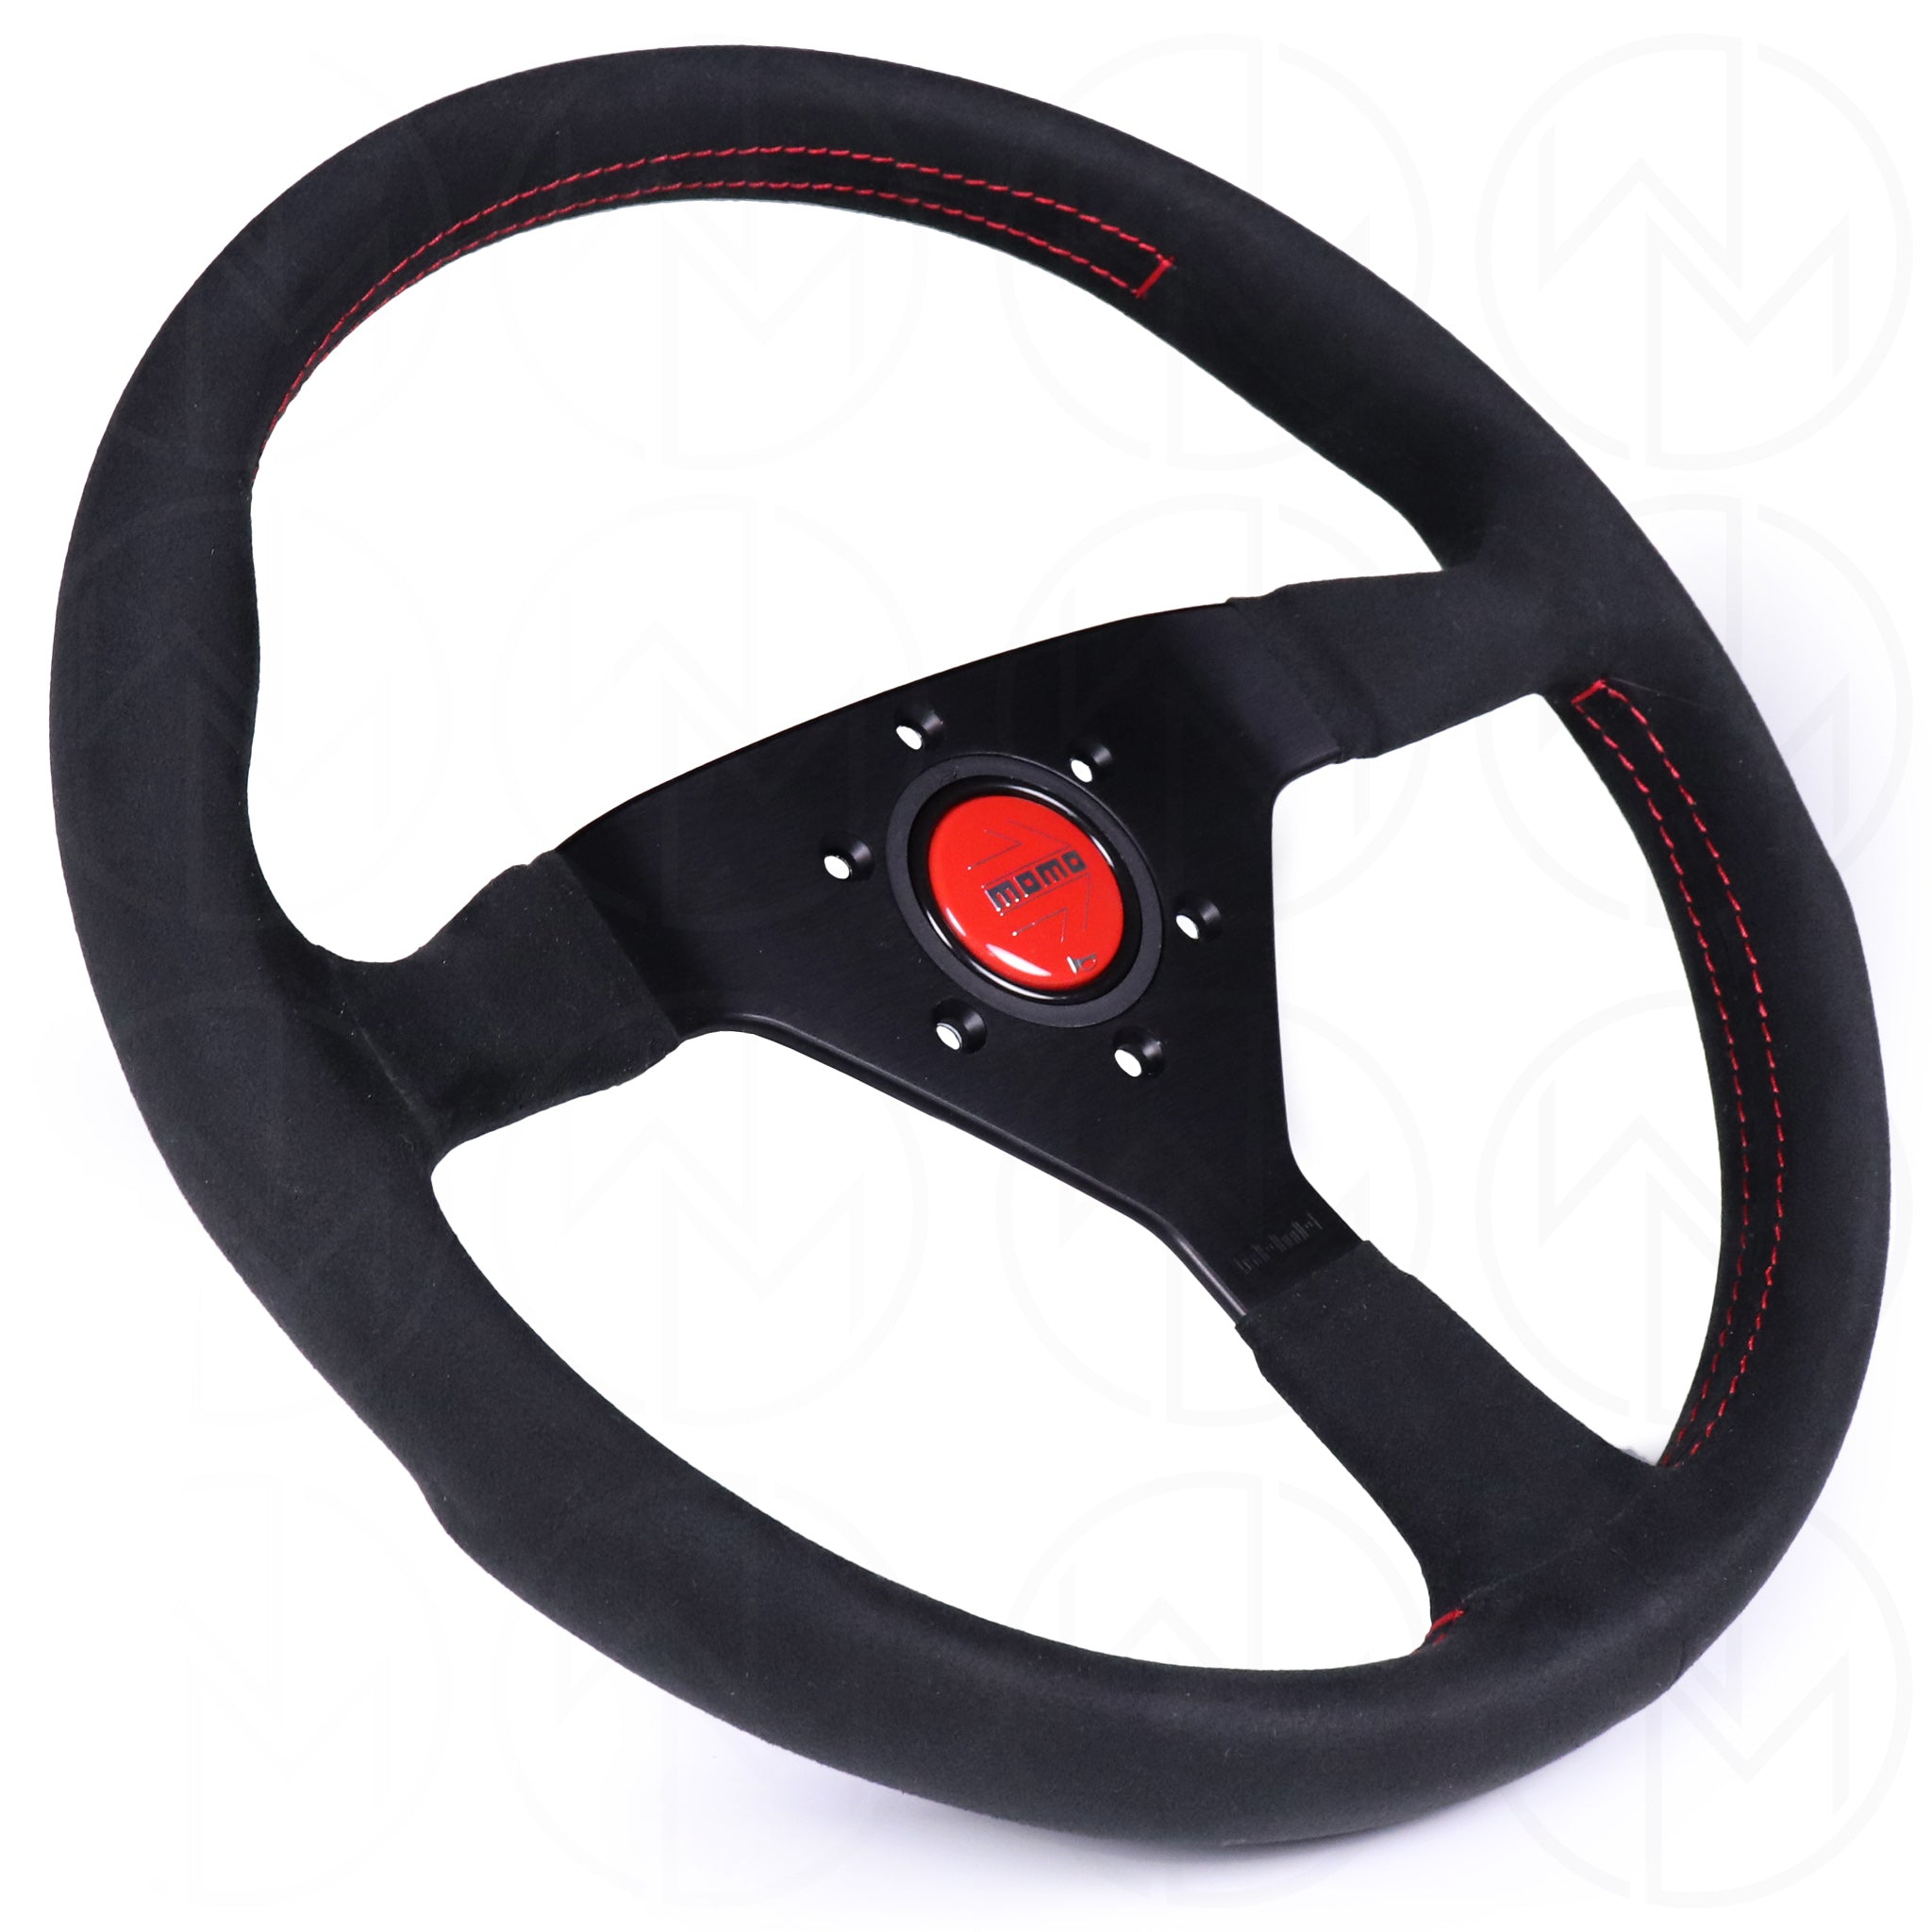 Momo Monte Carlo Steering Wheel 350mm Alcantara W Red Stitch Wheel Mod Wheelmod